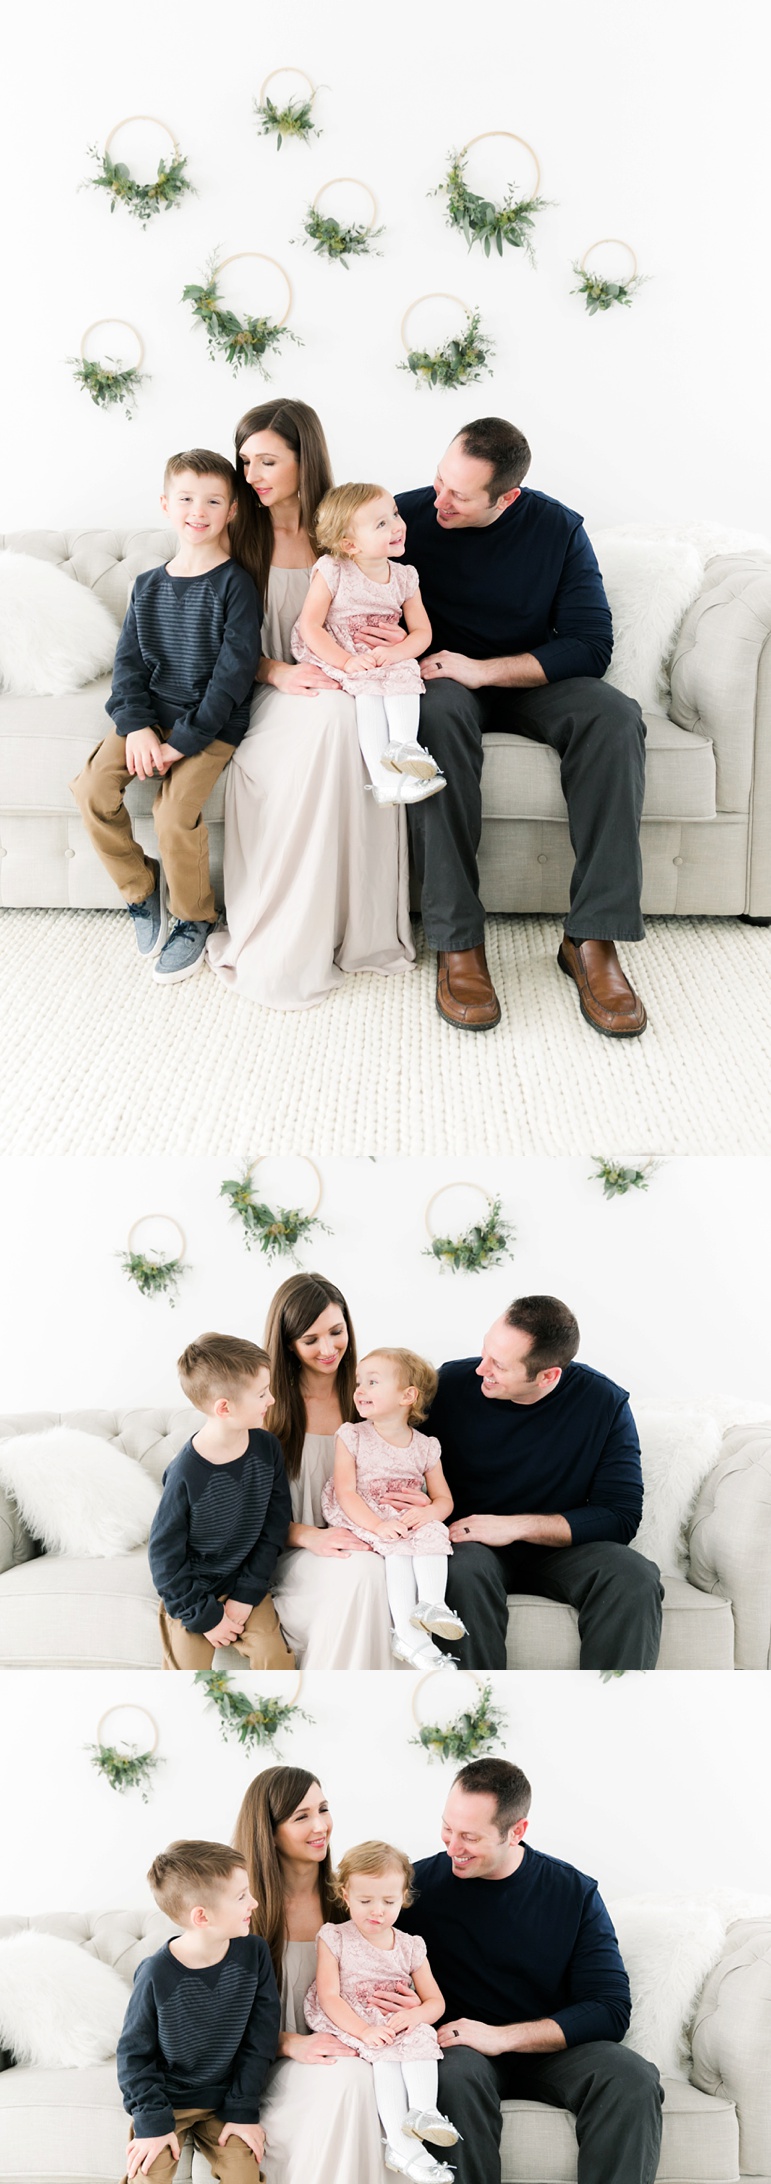 Wisconsin Lifestyle Studio Photographers, Indoor Family Photographers Green Bay WI